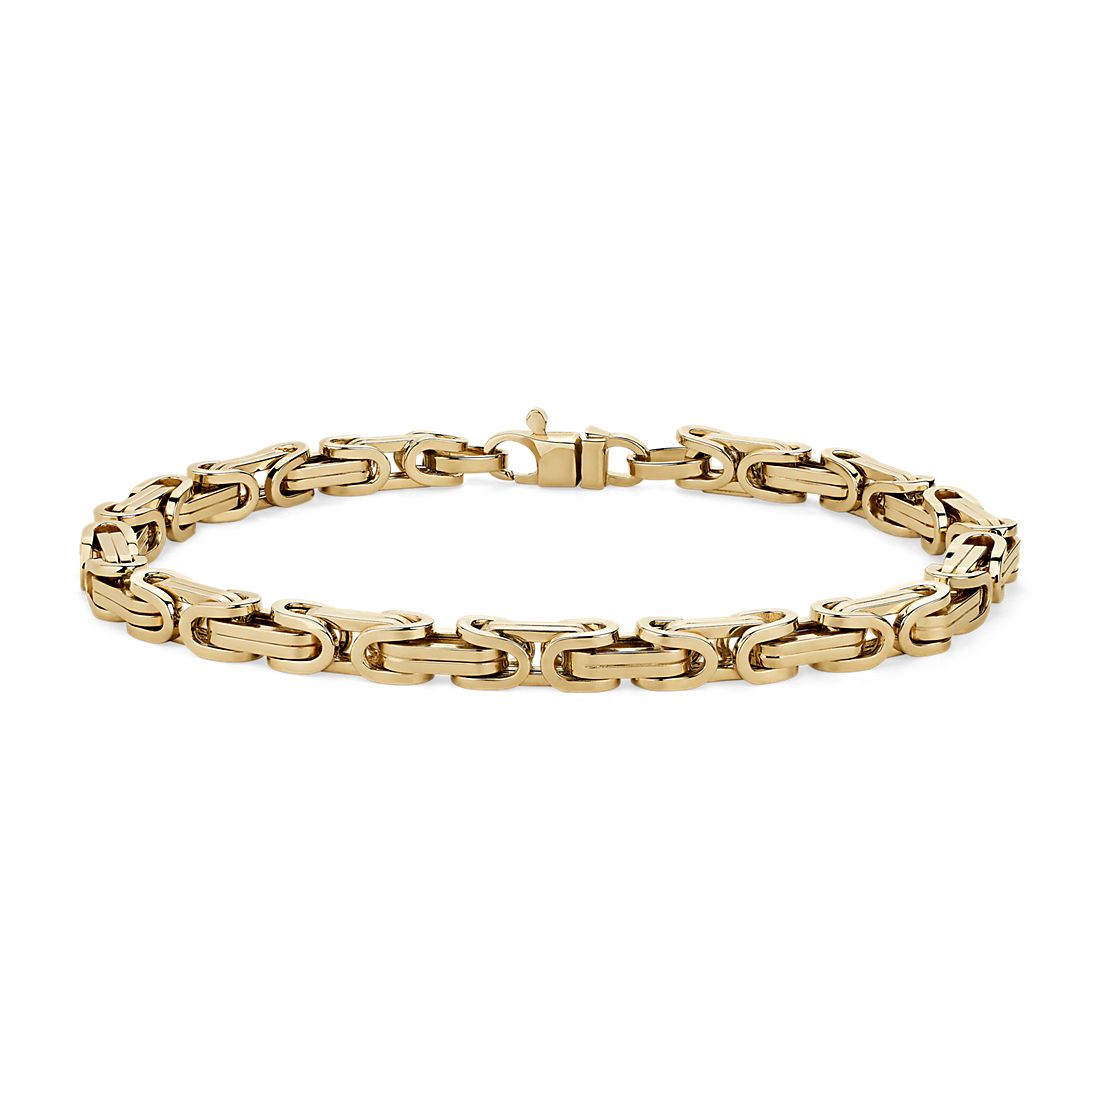 8" Men's Byzantine Chain Bracelet in 14k Yellow Gold (5 mm)